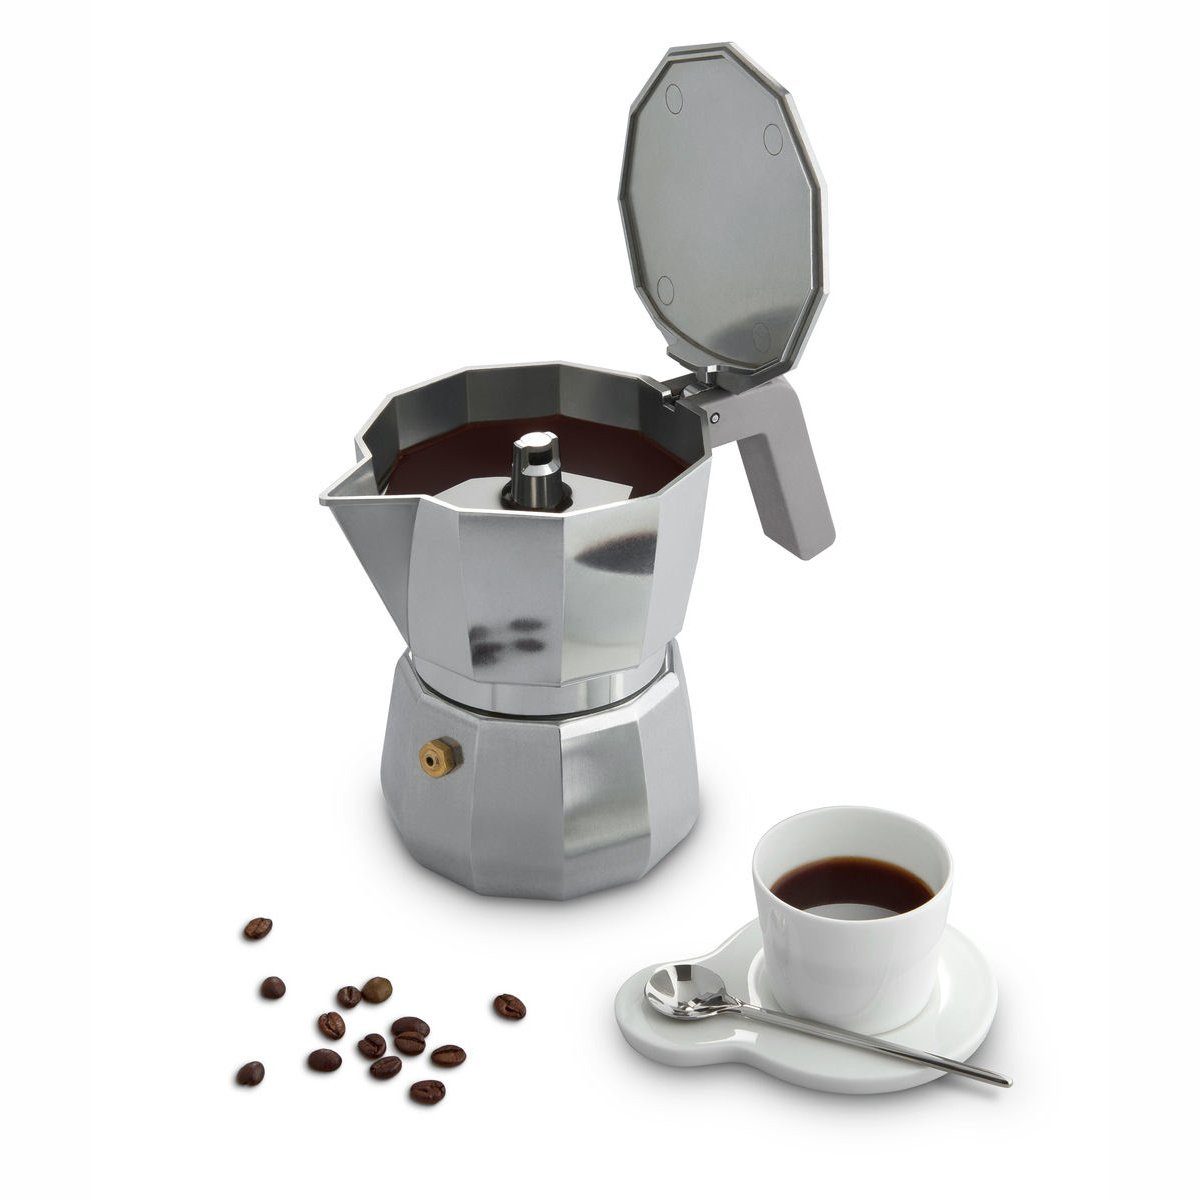 Alessi Espressokocher Espressokocher MOKA modern 1, 0.07l Kaffeekanne  online kaufen | OTTO